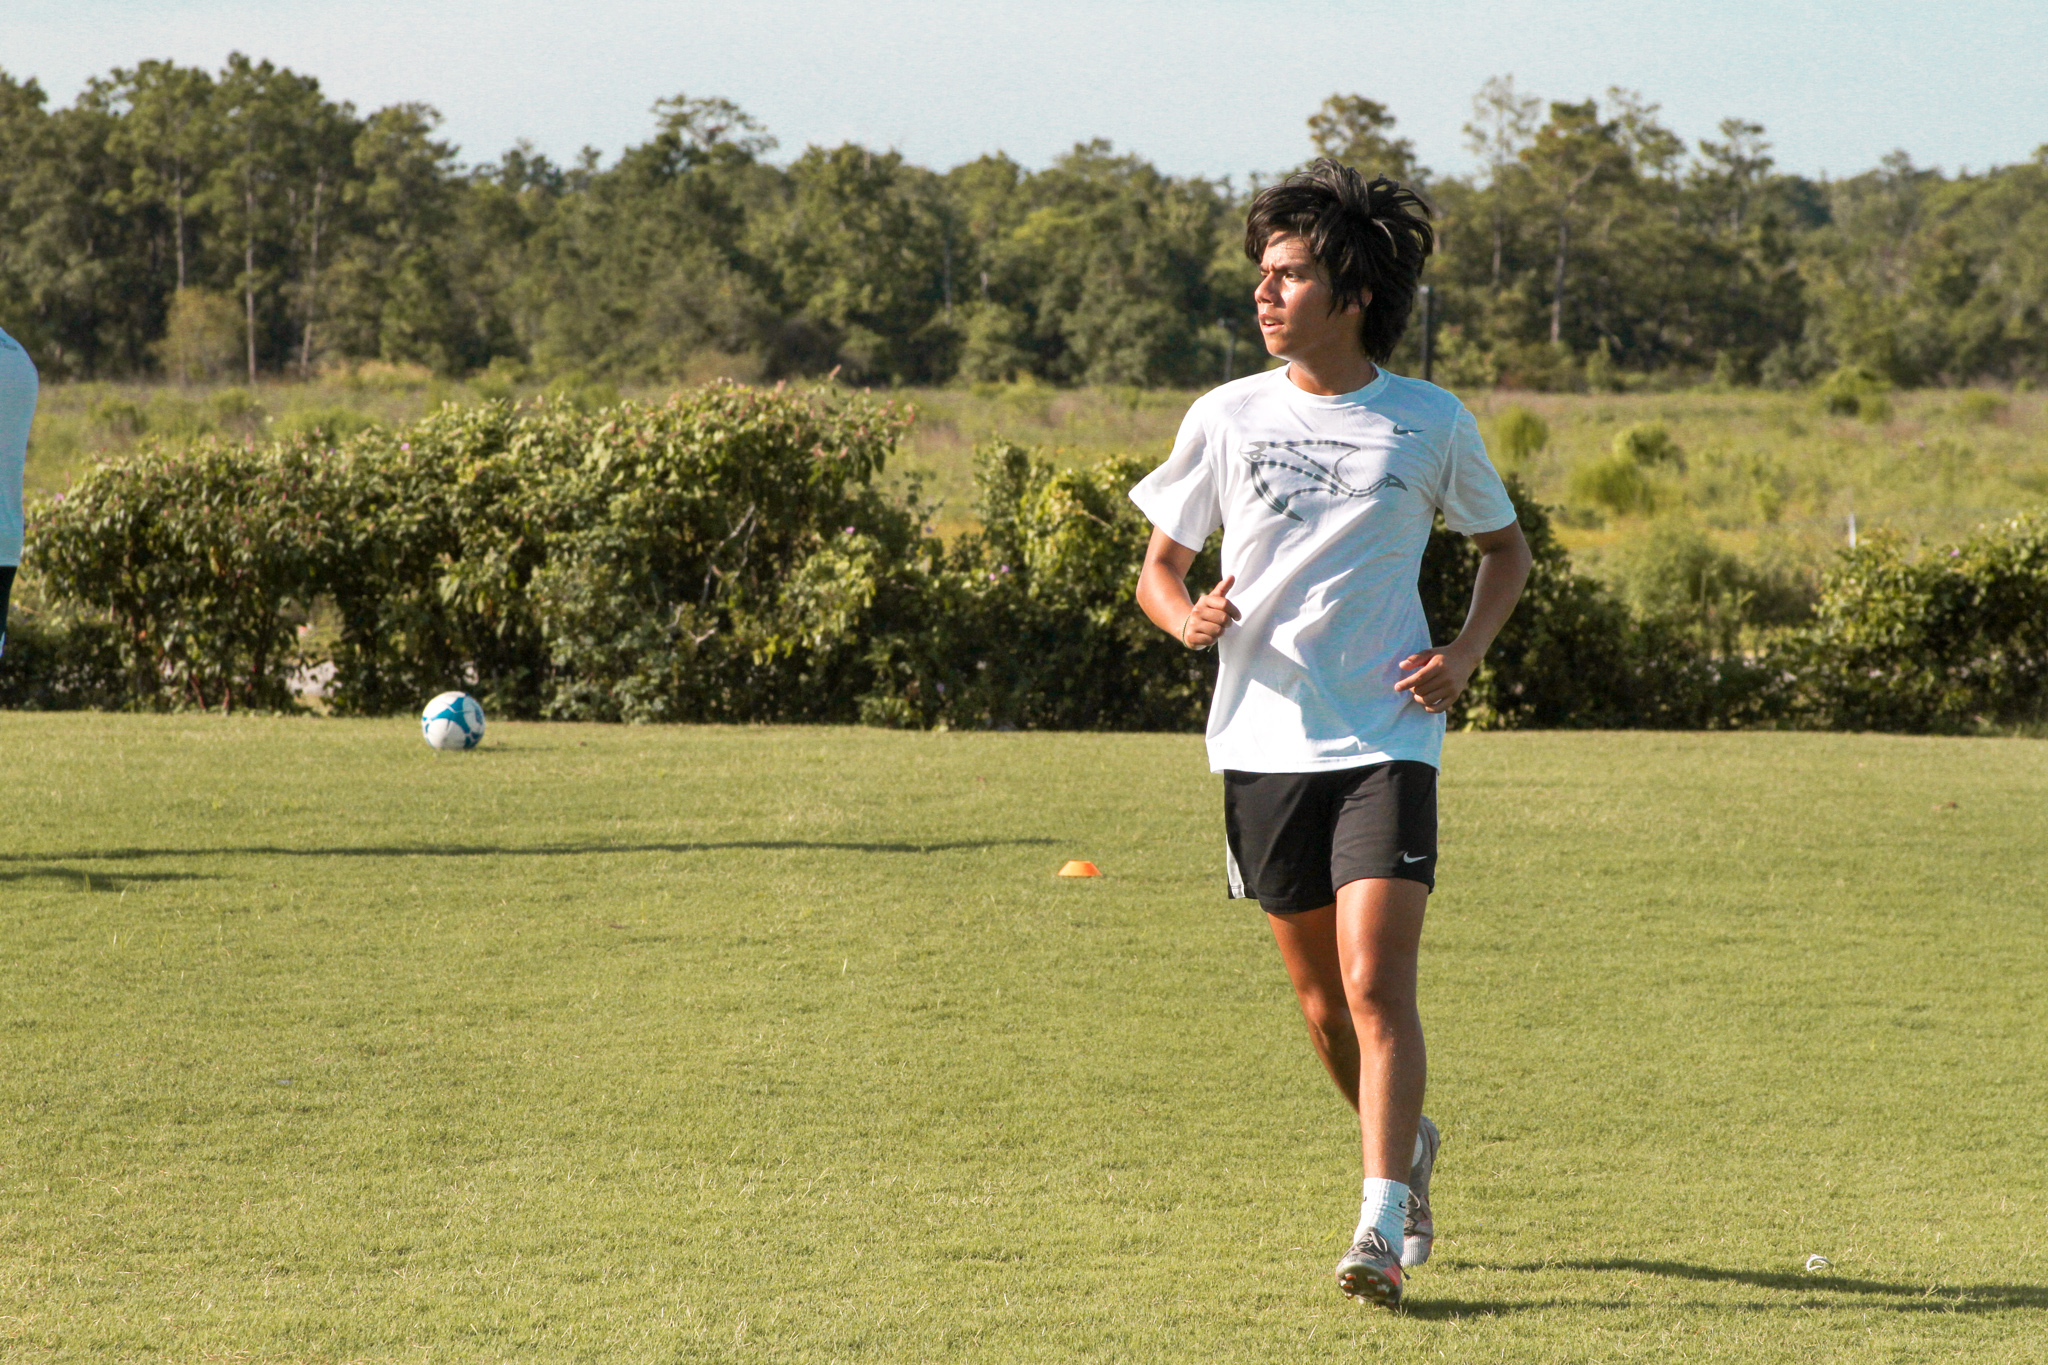 action shot of Alex Medina kicking a soccer ball